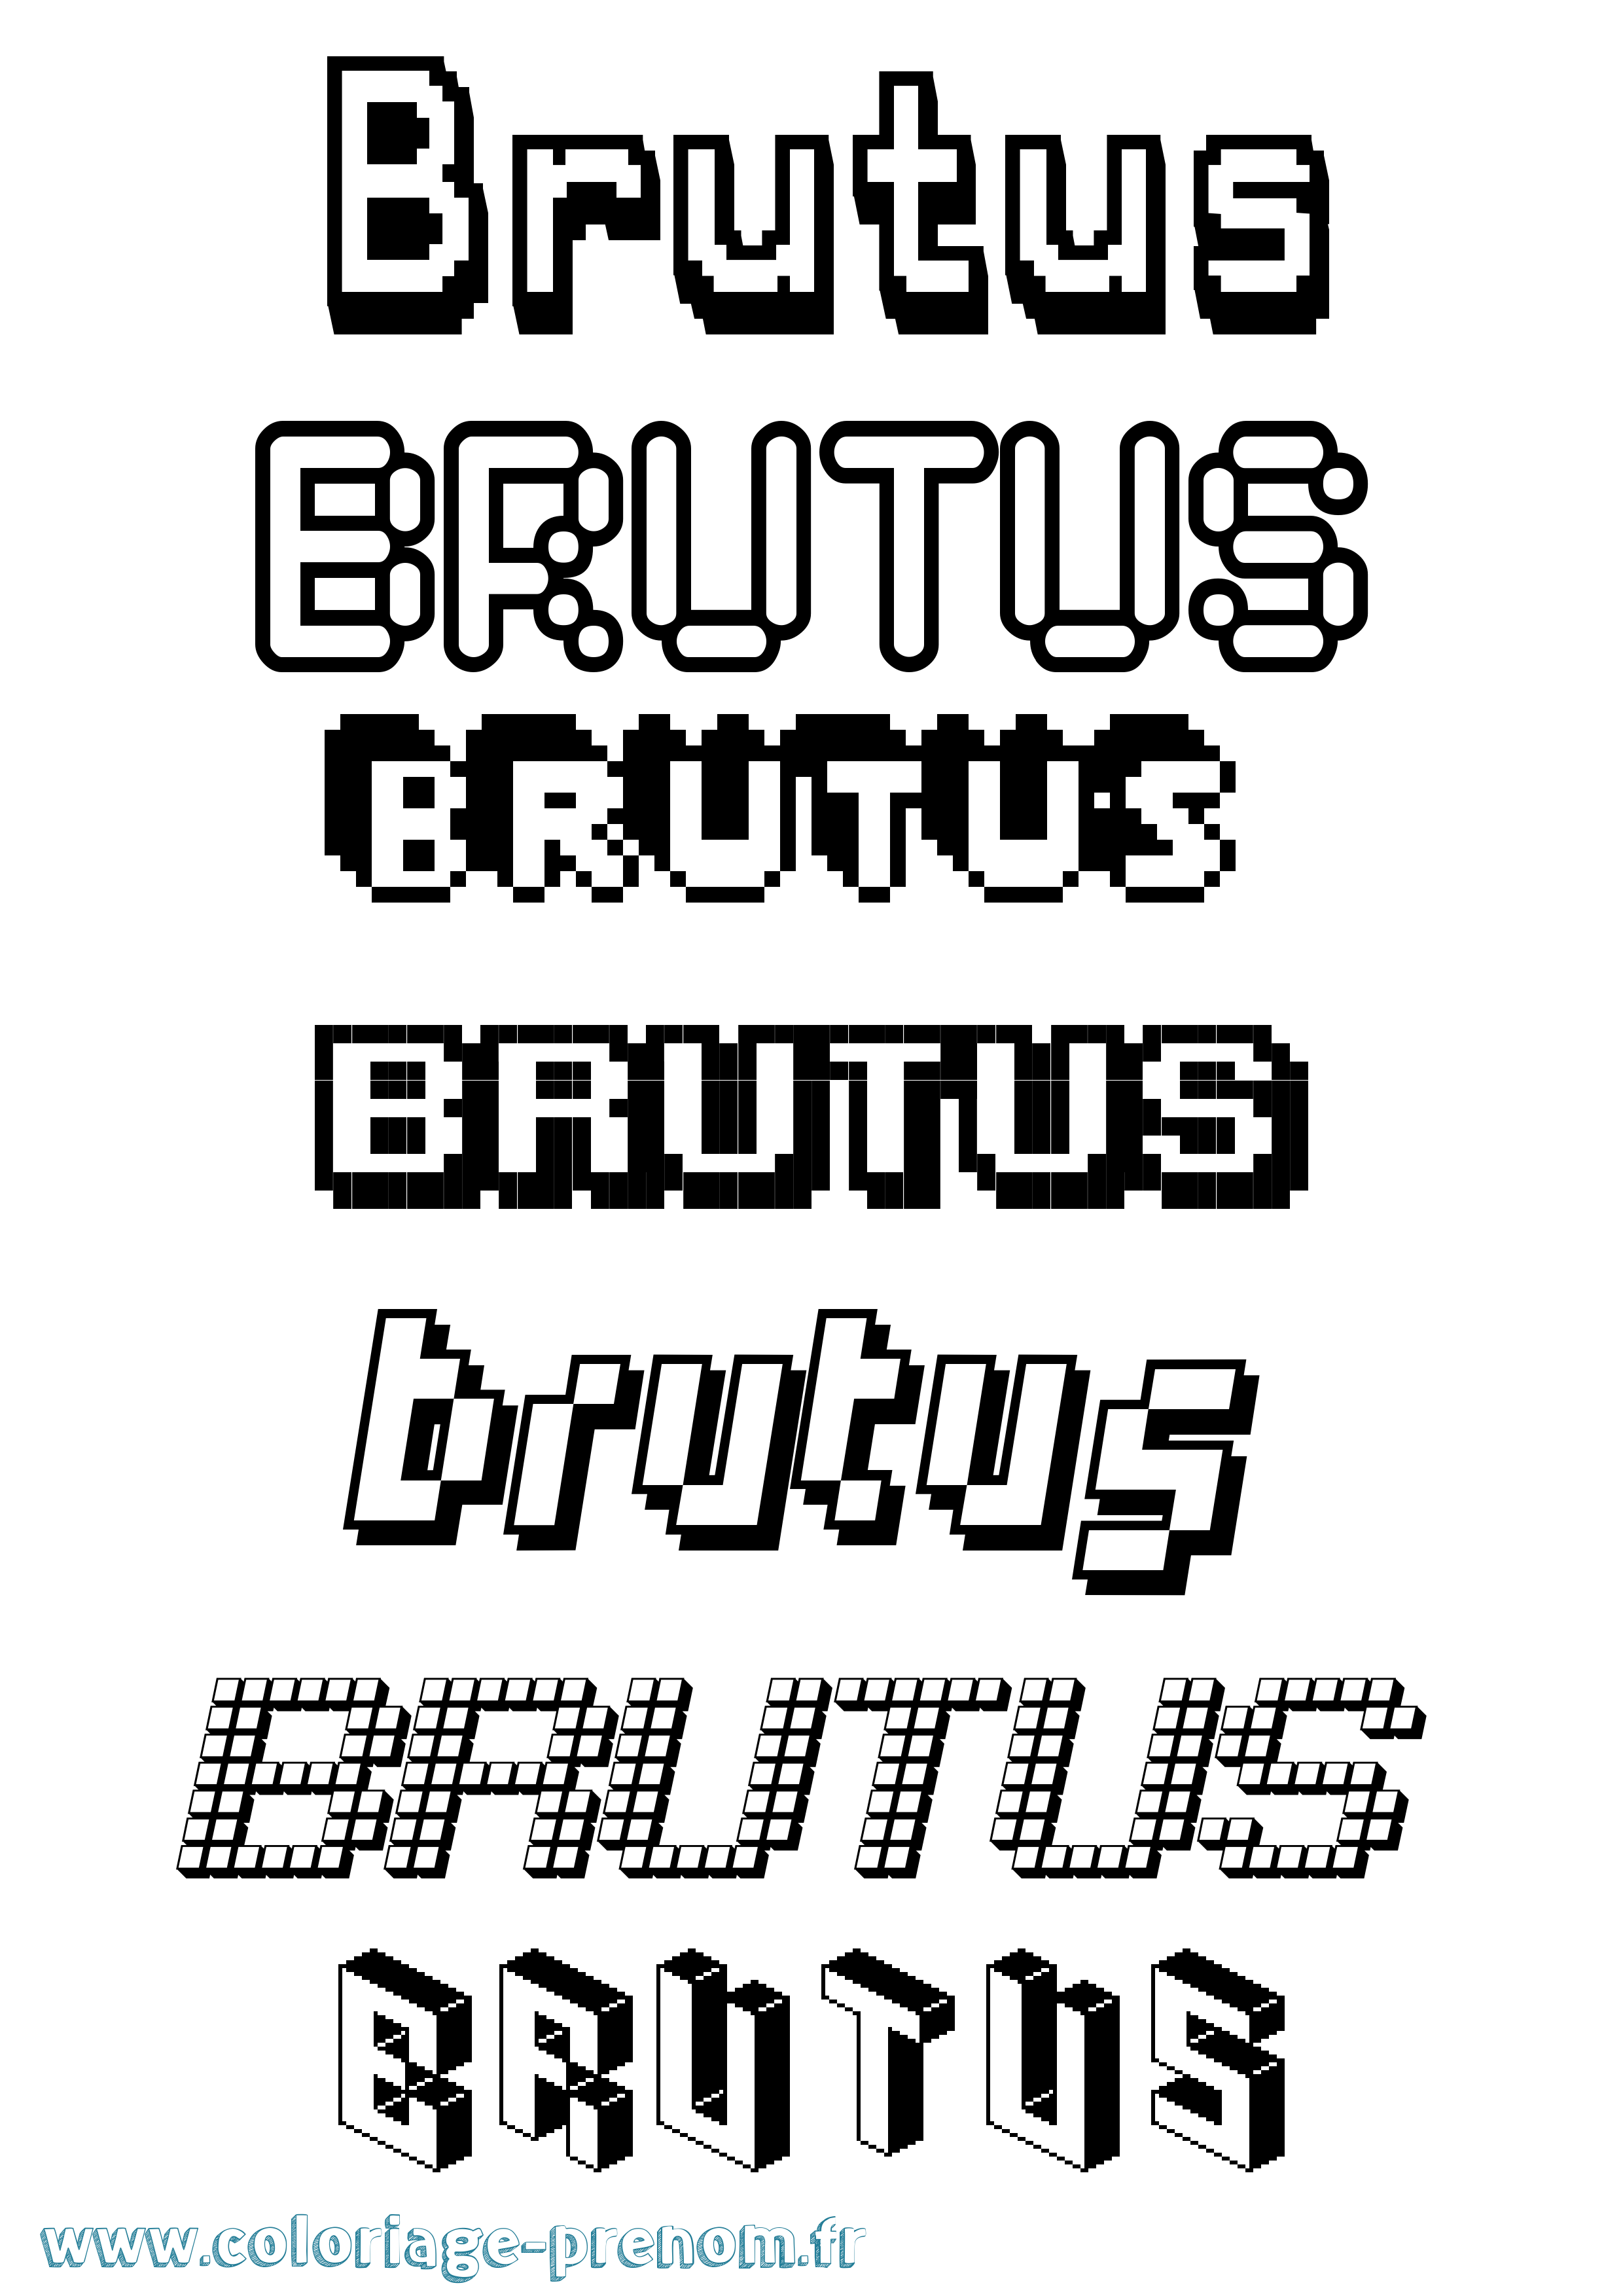 Coloriage prénom Brutus Pixel